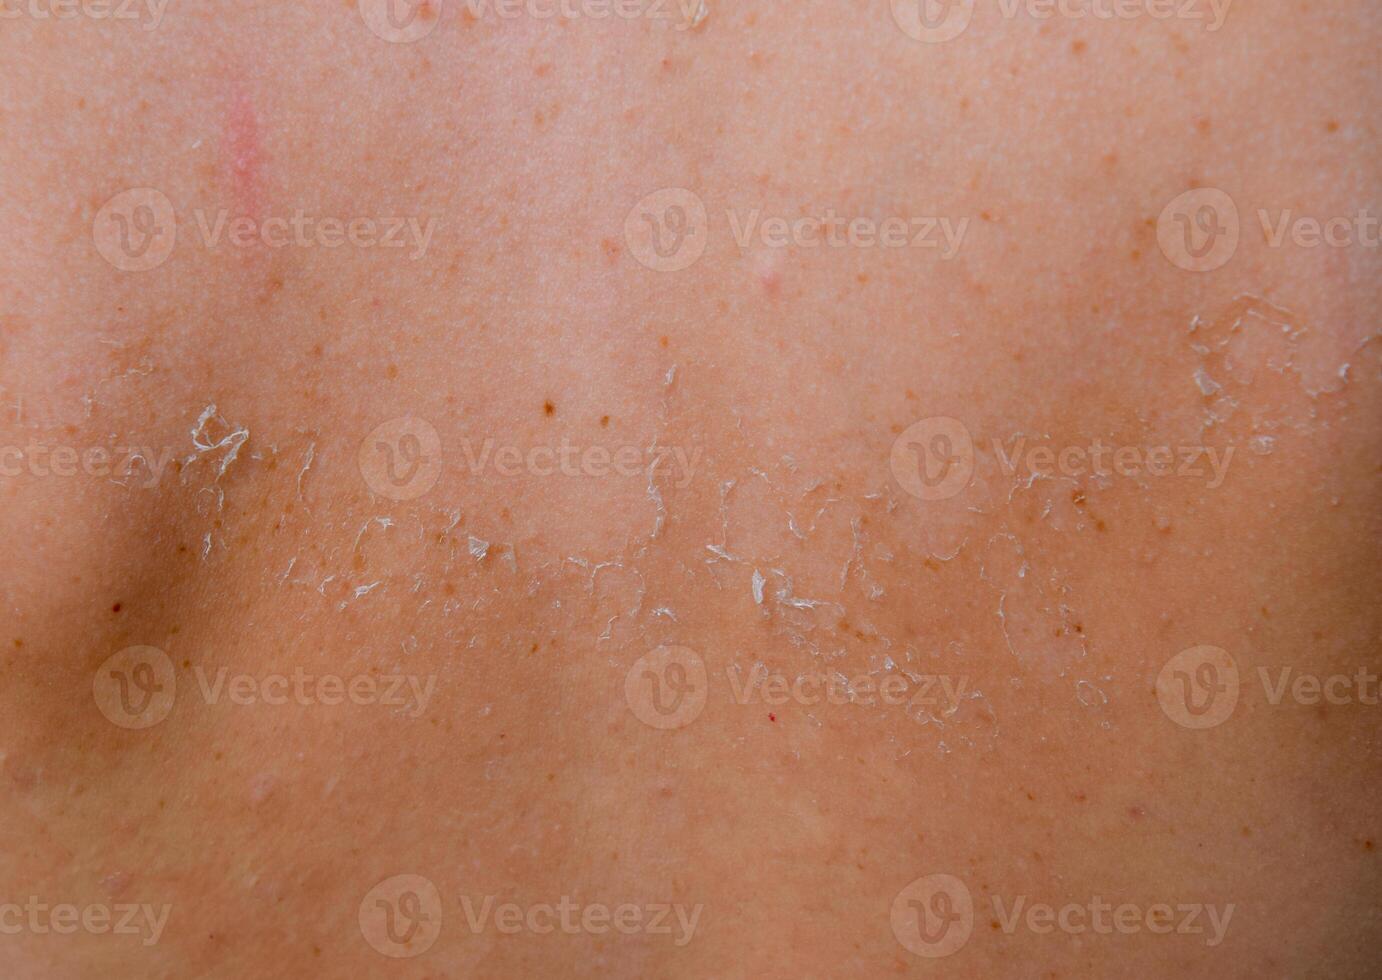 Sunburn on the skin of the back. Exfoliation, skin peels off. Dangerous sun tan photo